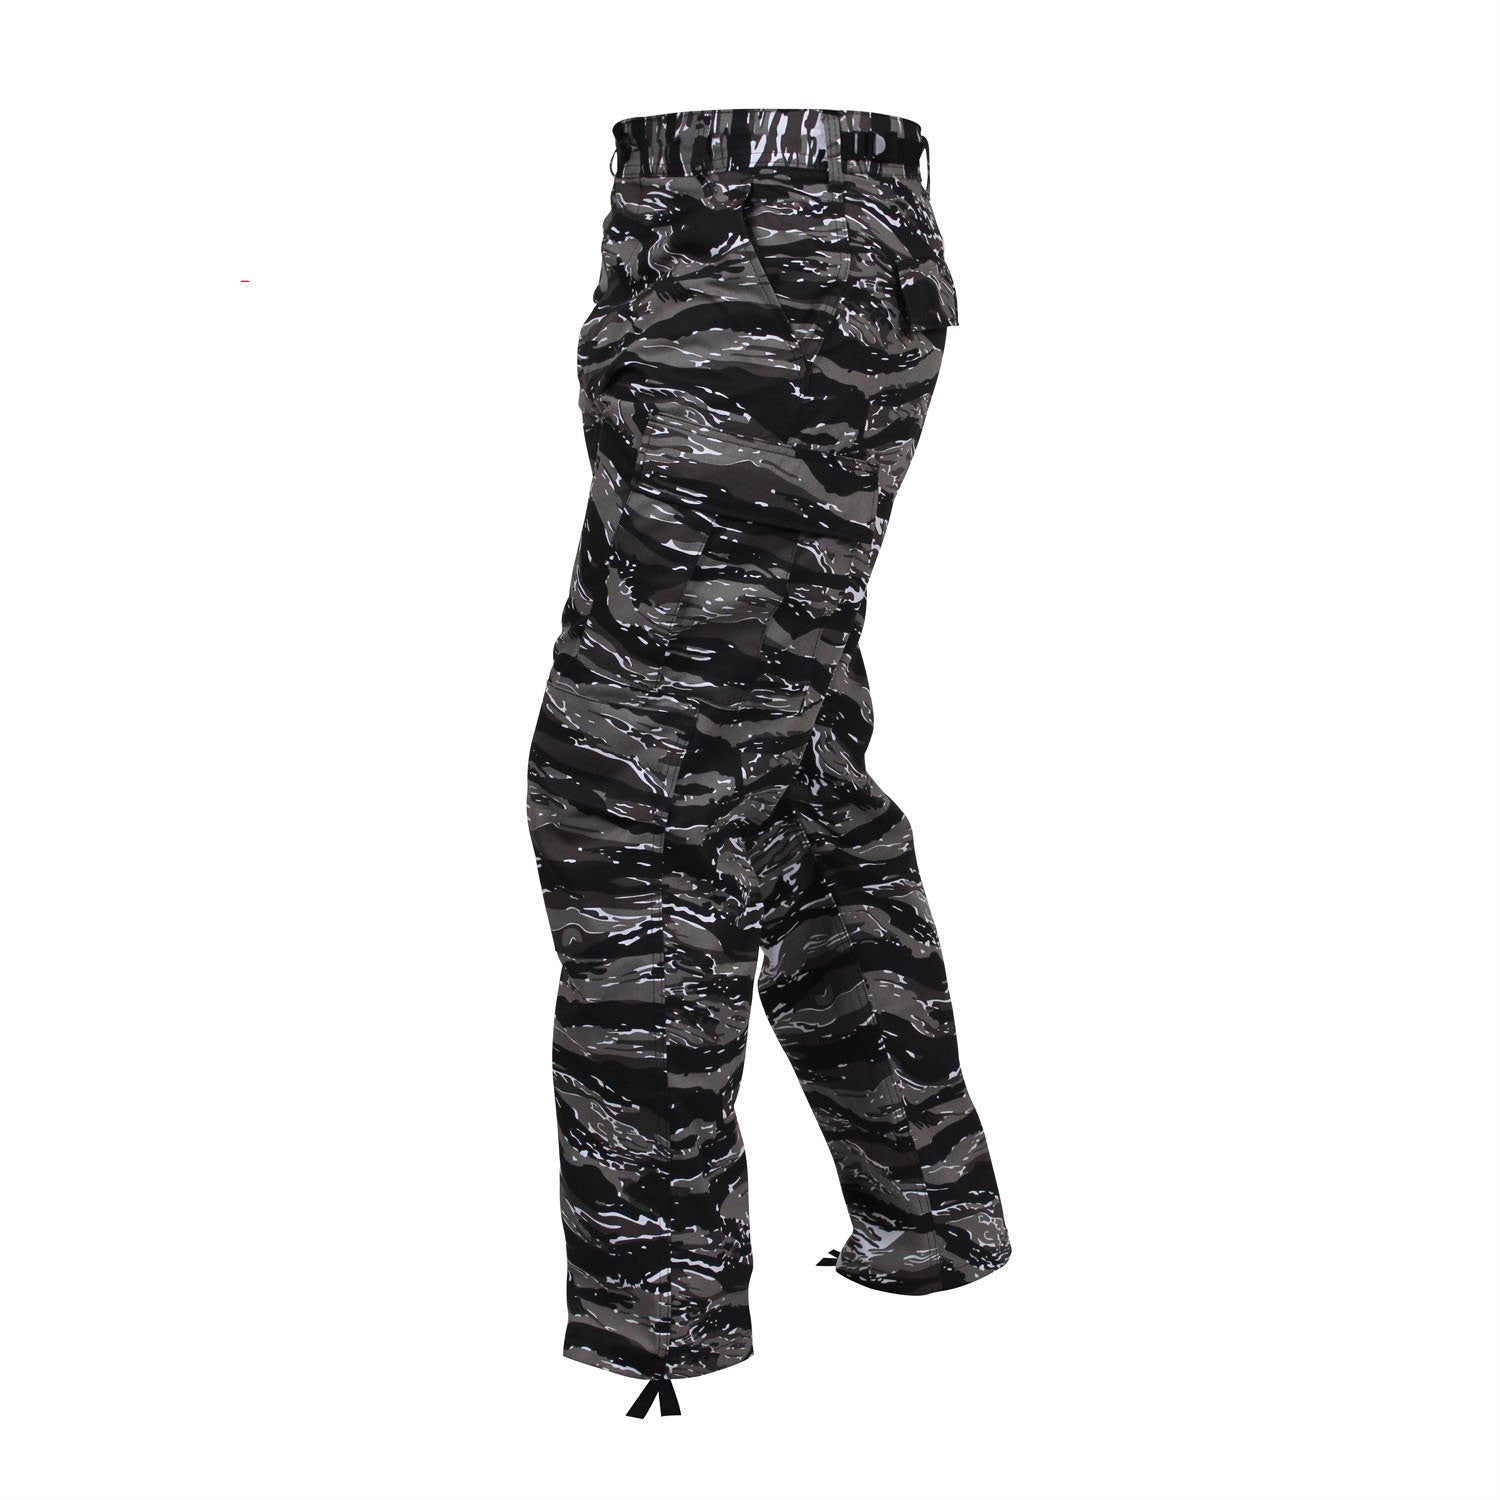 BDU Pants | Tactical Pants For Men | Urban Tiger Stripe Camouflage